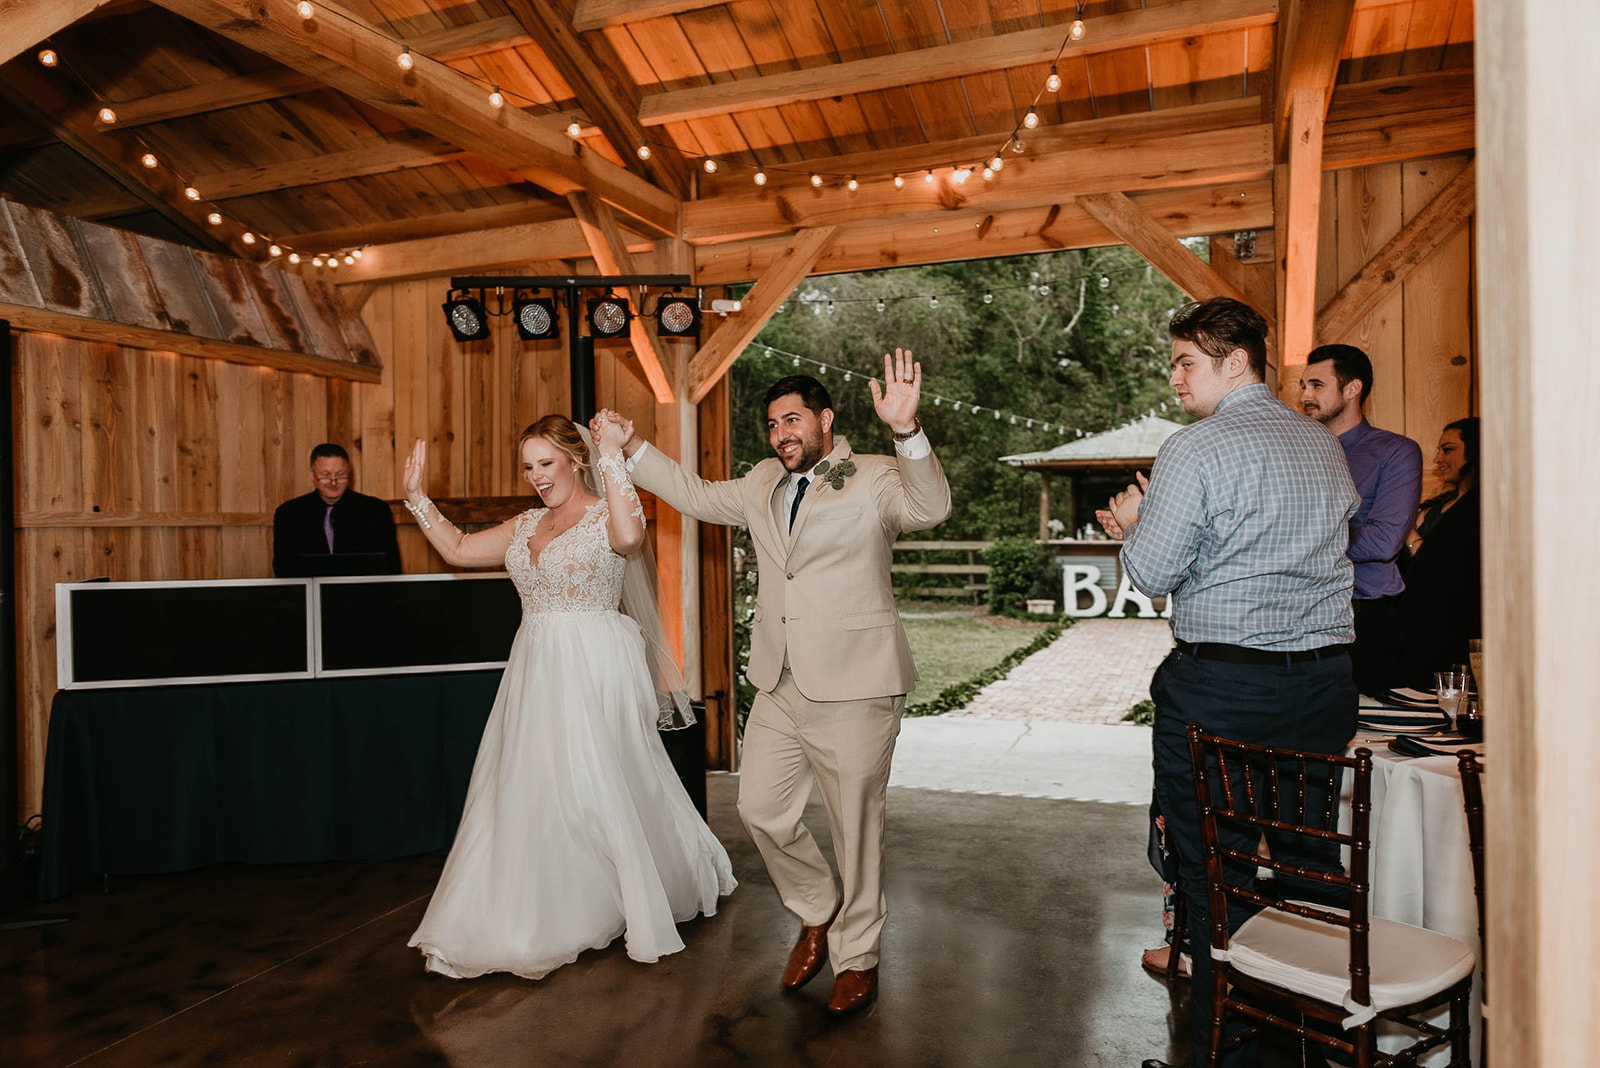 Bridle Oaks Barn Central Florida Rustic Wedding Reception Photography